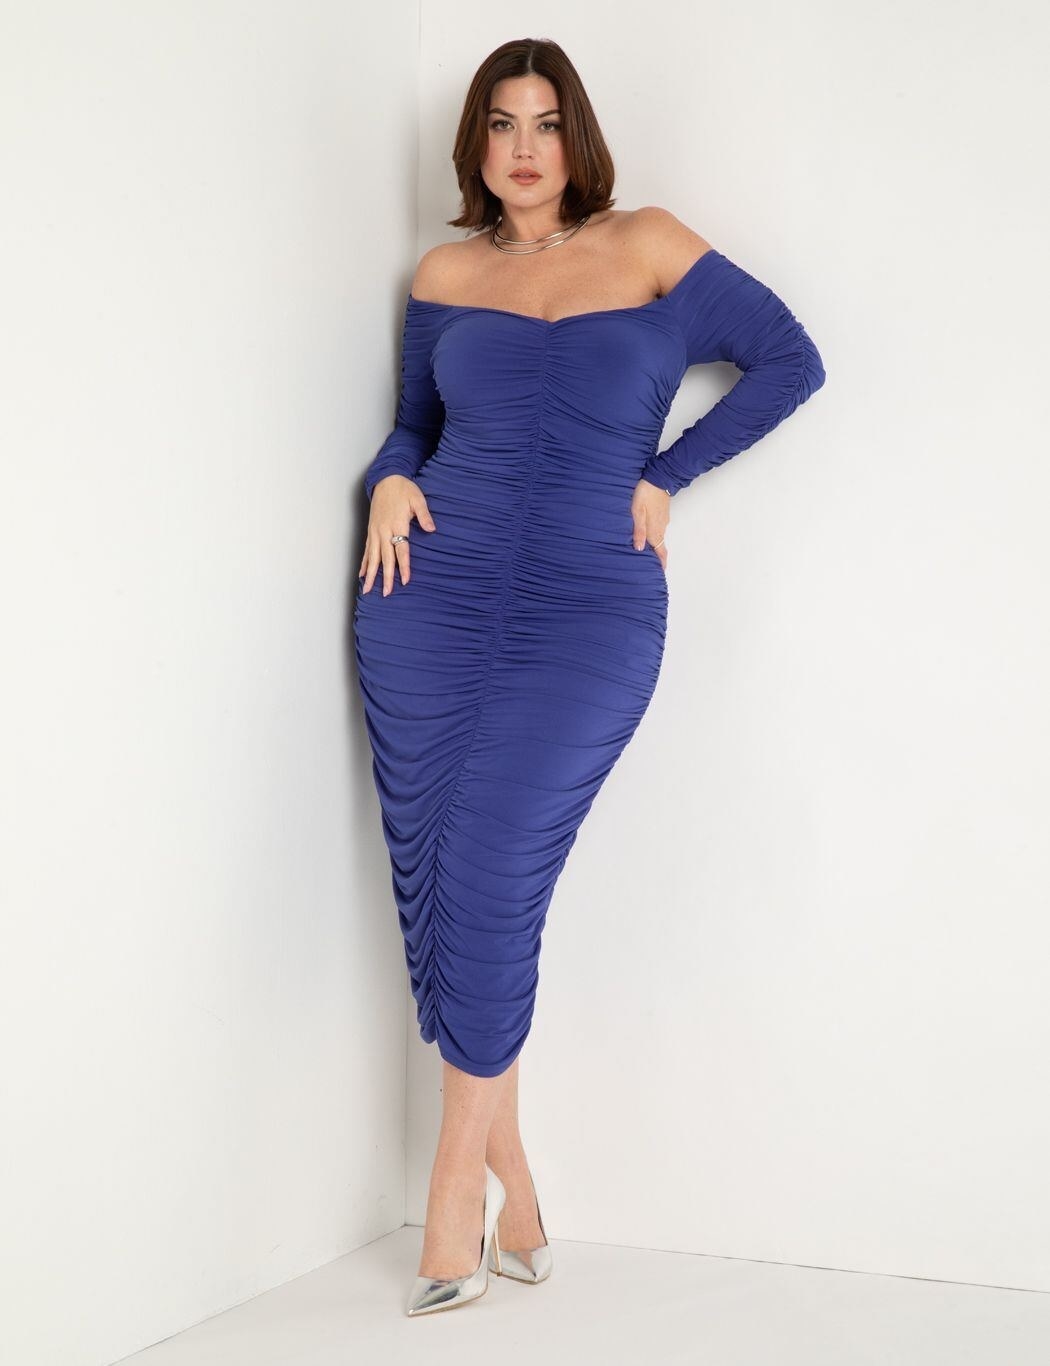 model wearing dark blue off-shoulder midi dress